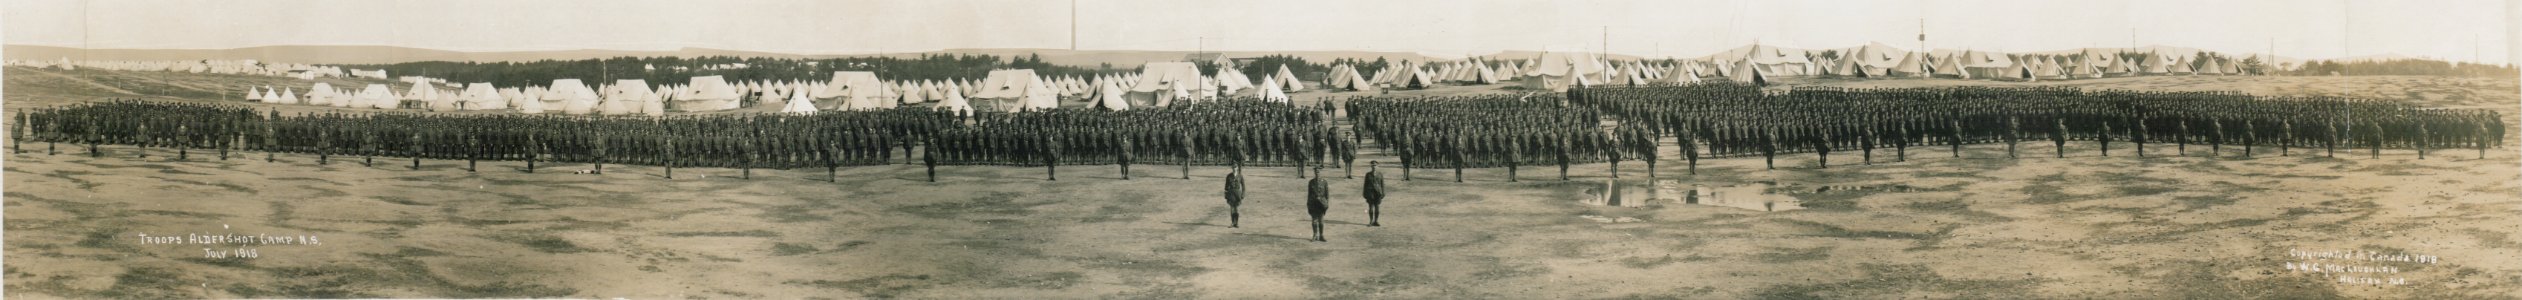 Troops at Alderscot Camp, N.S., July 1918 (HS85-10-34556) photo